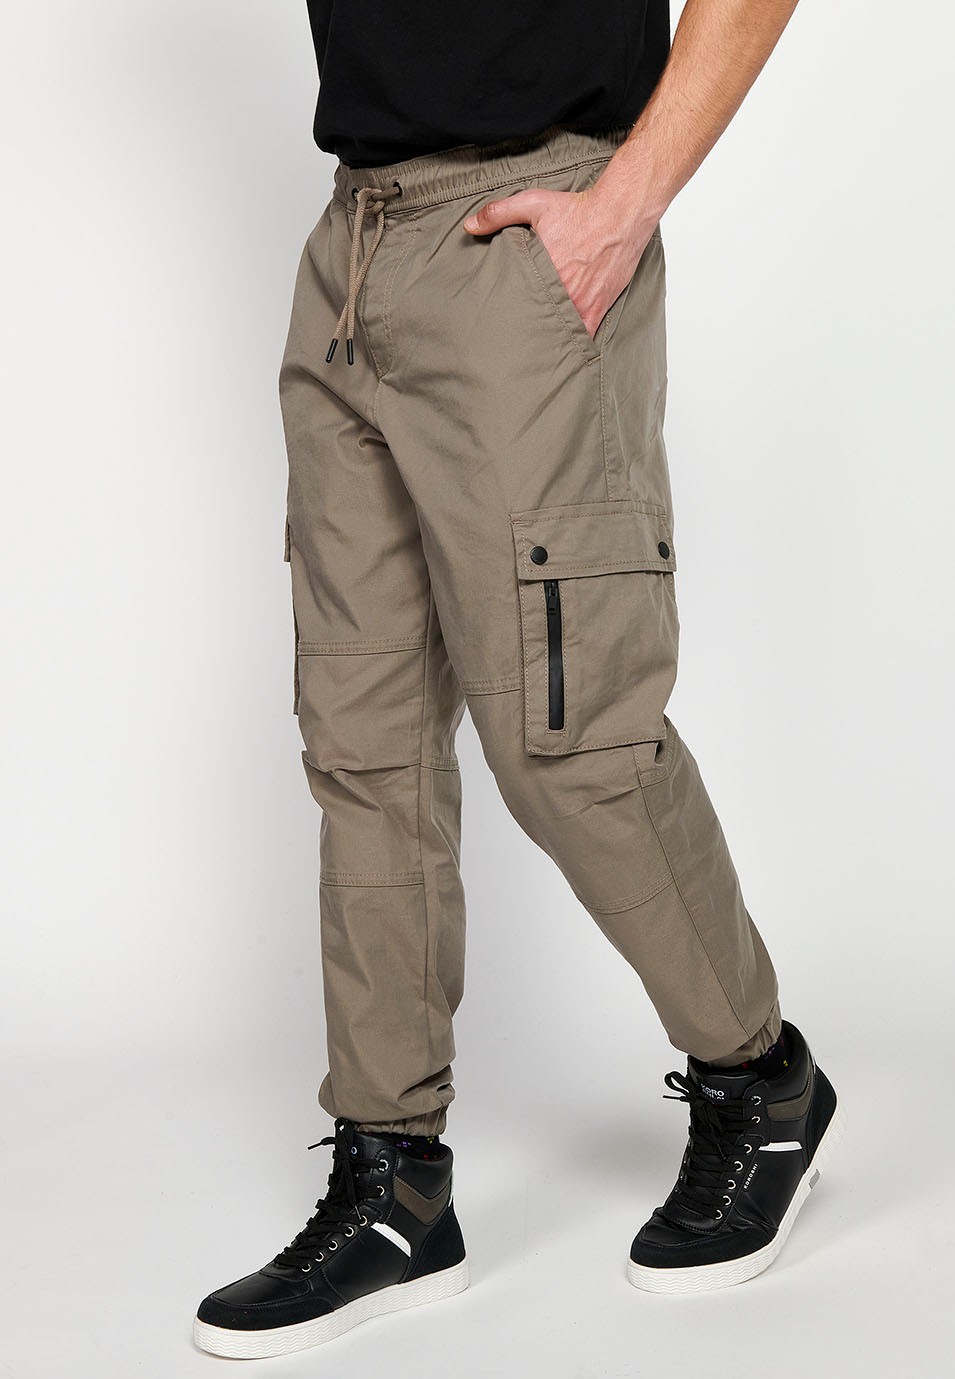 Pantalón jogger cargo con Cintura engomada con cordón y Bolsillos, dos laterales con solapa de Color Beige para Hombre